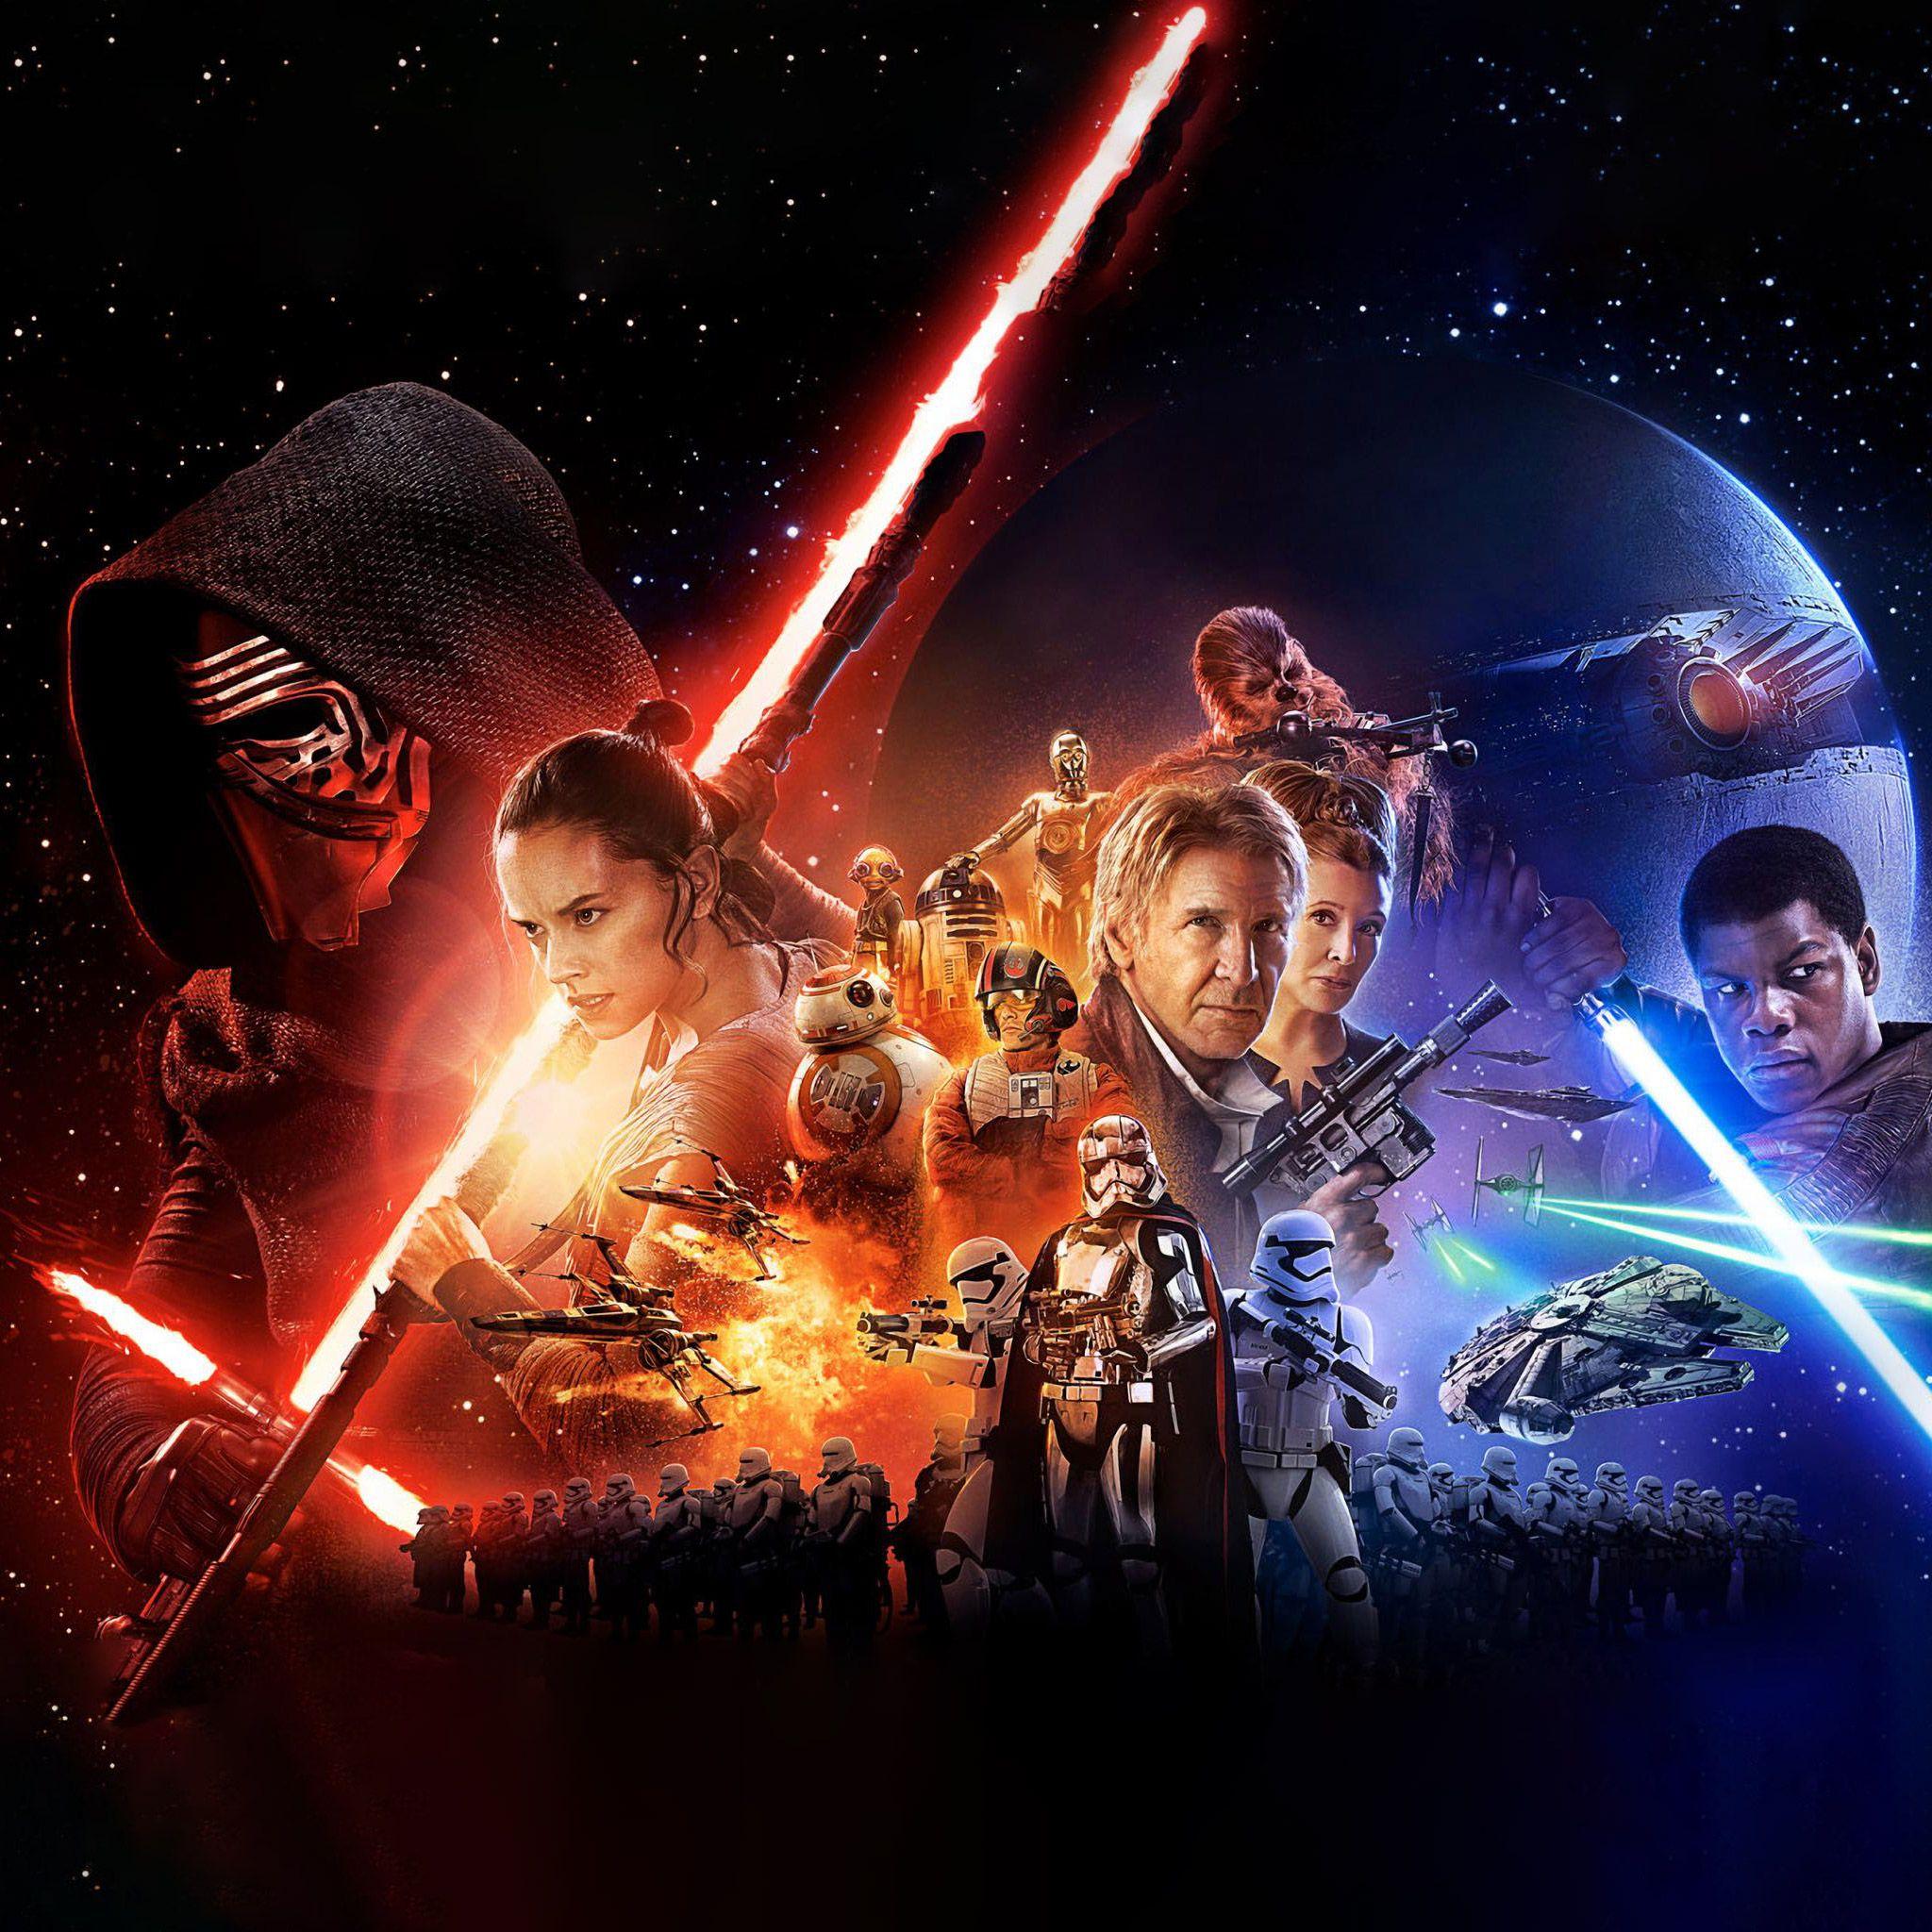 Star Wars The Force Awakens iPad 4 wallpaper. Tablet wallpaper